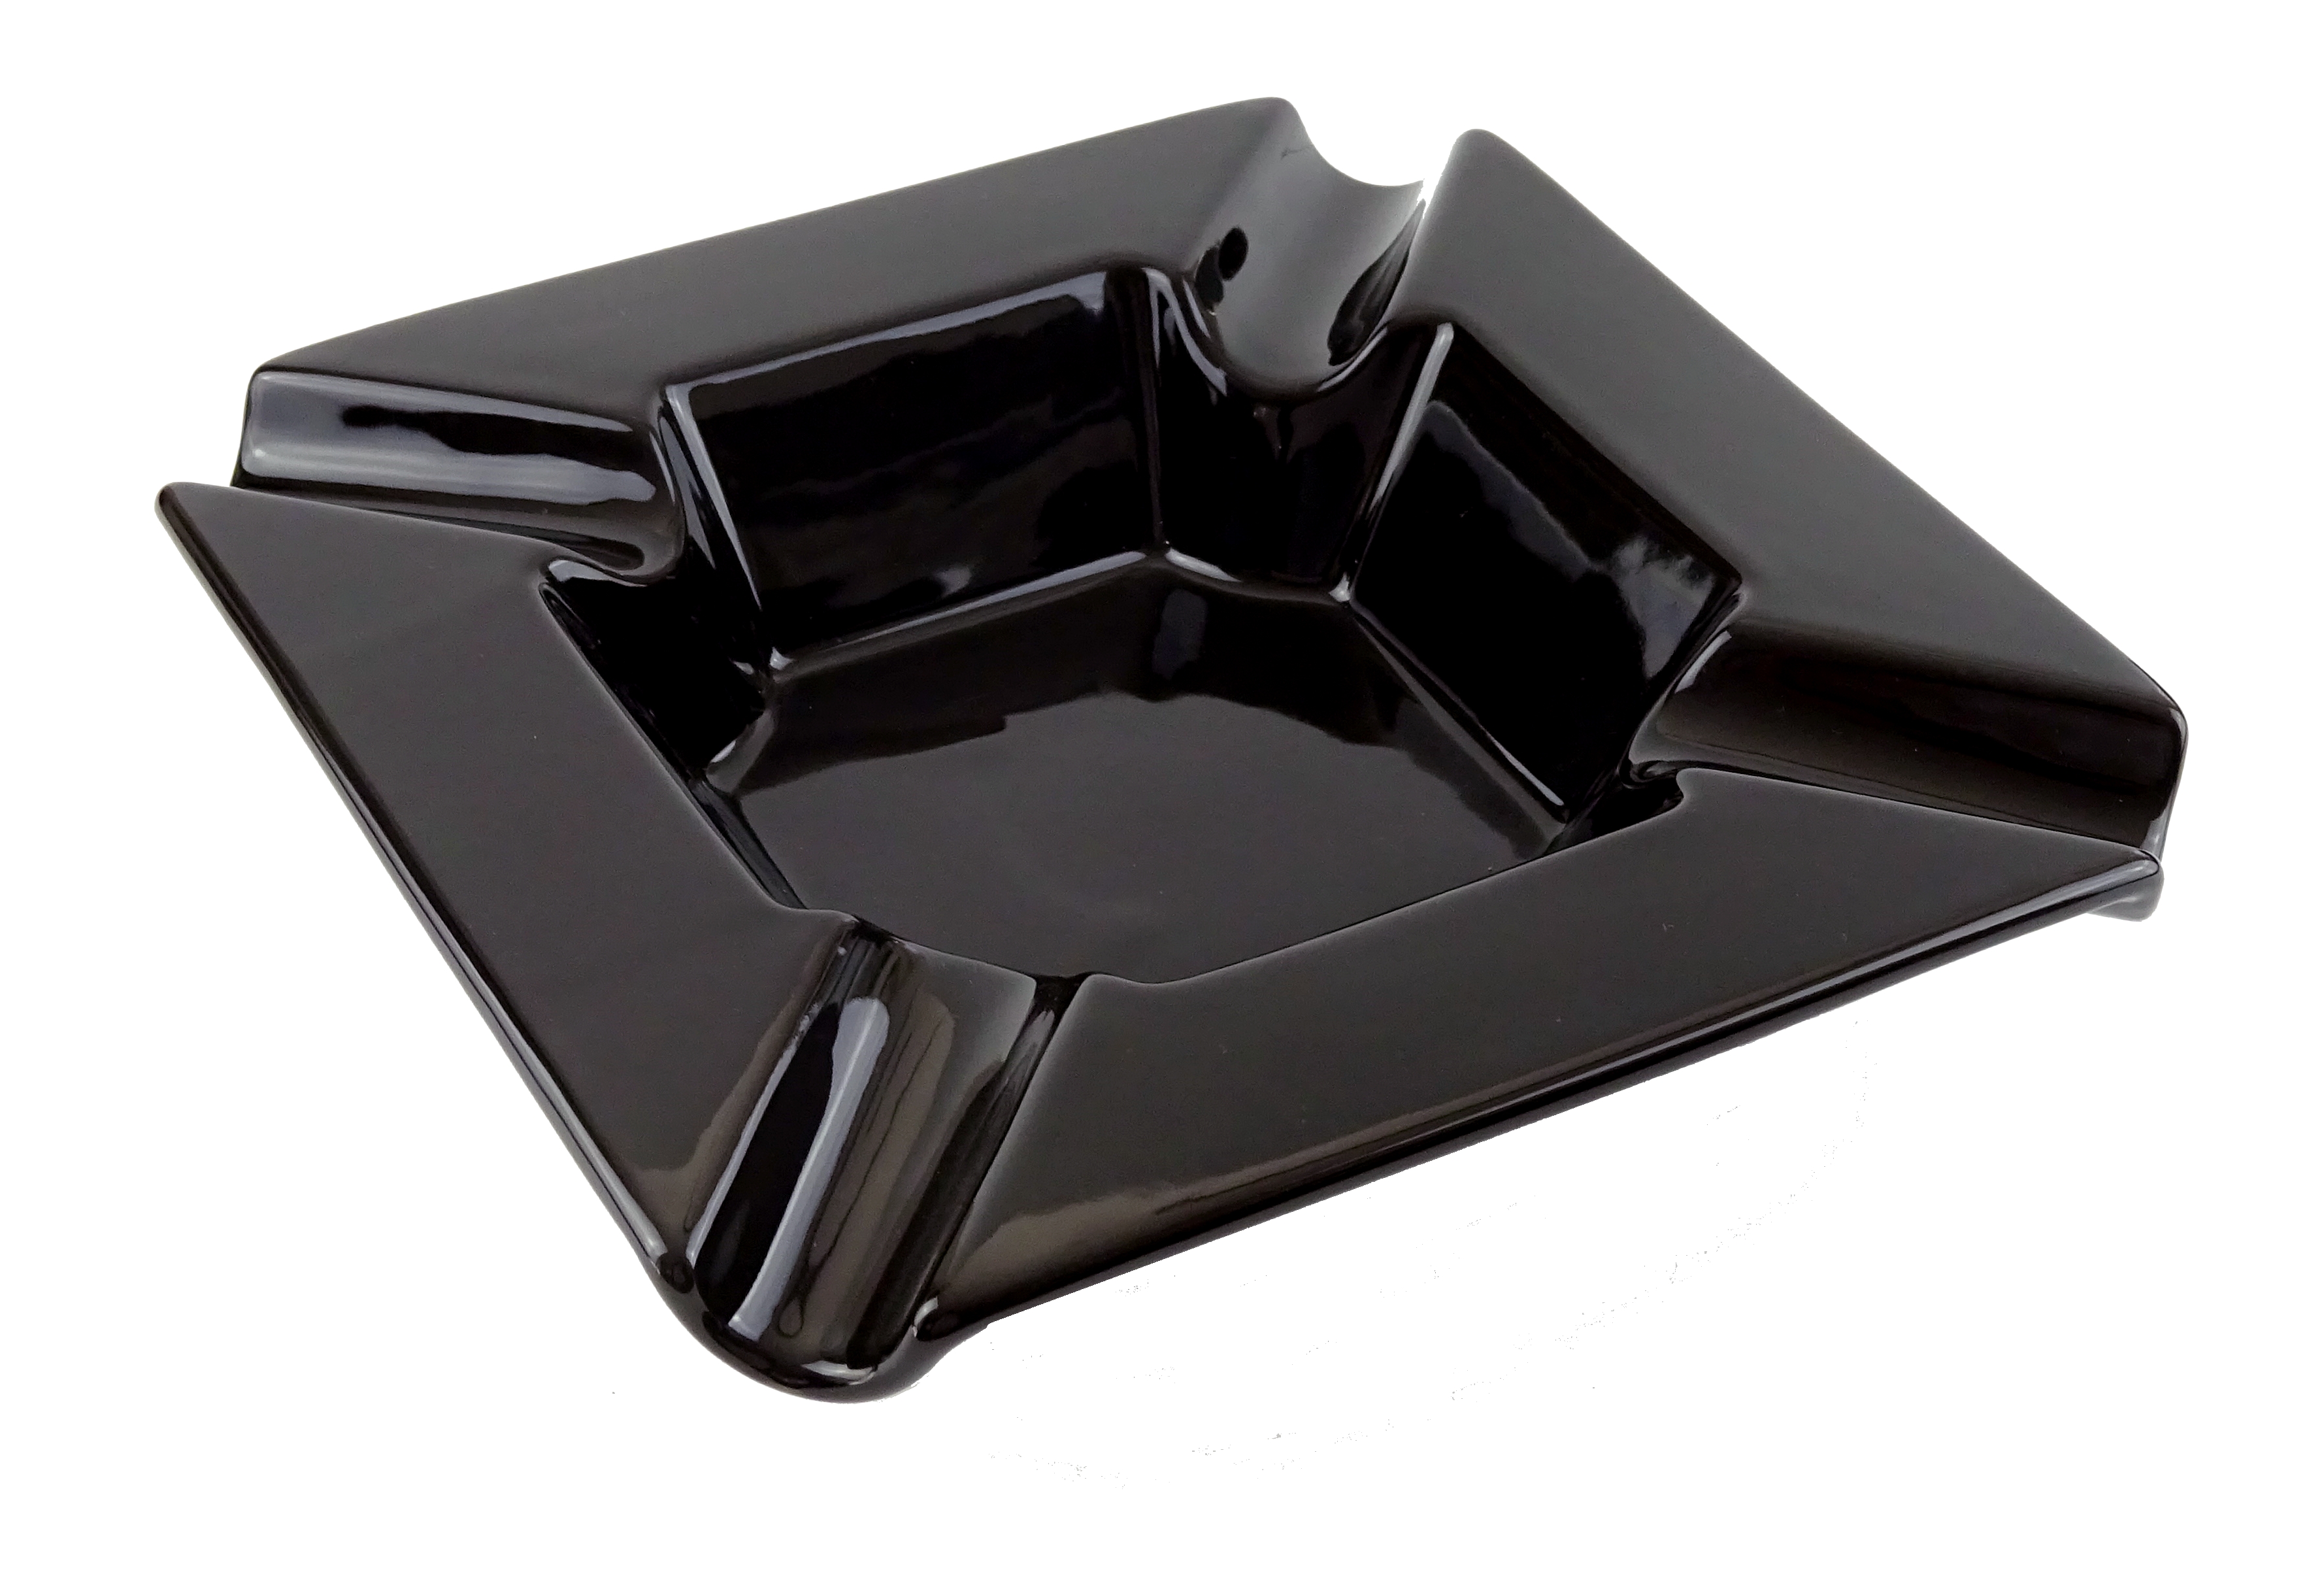 Angelo Zigarrenascher Keramik schwarz 4 Ablagen 22x22x5cm